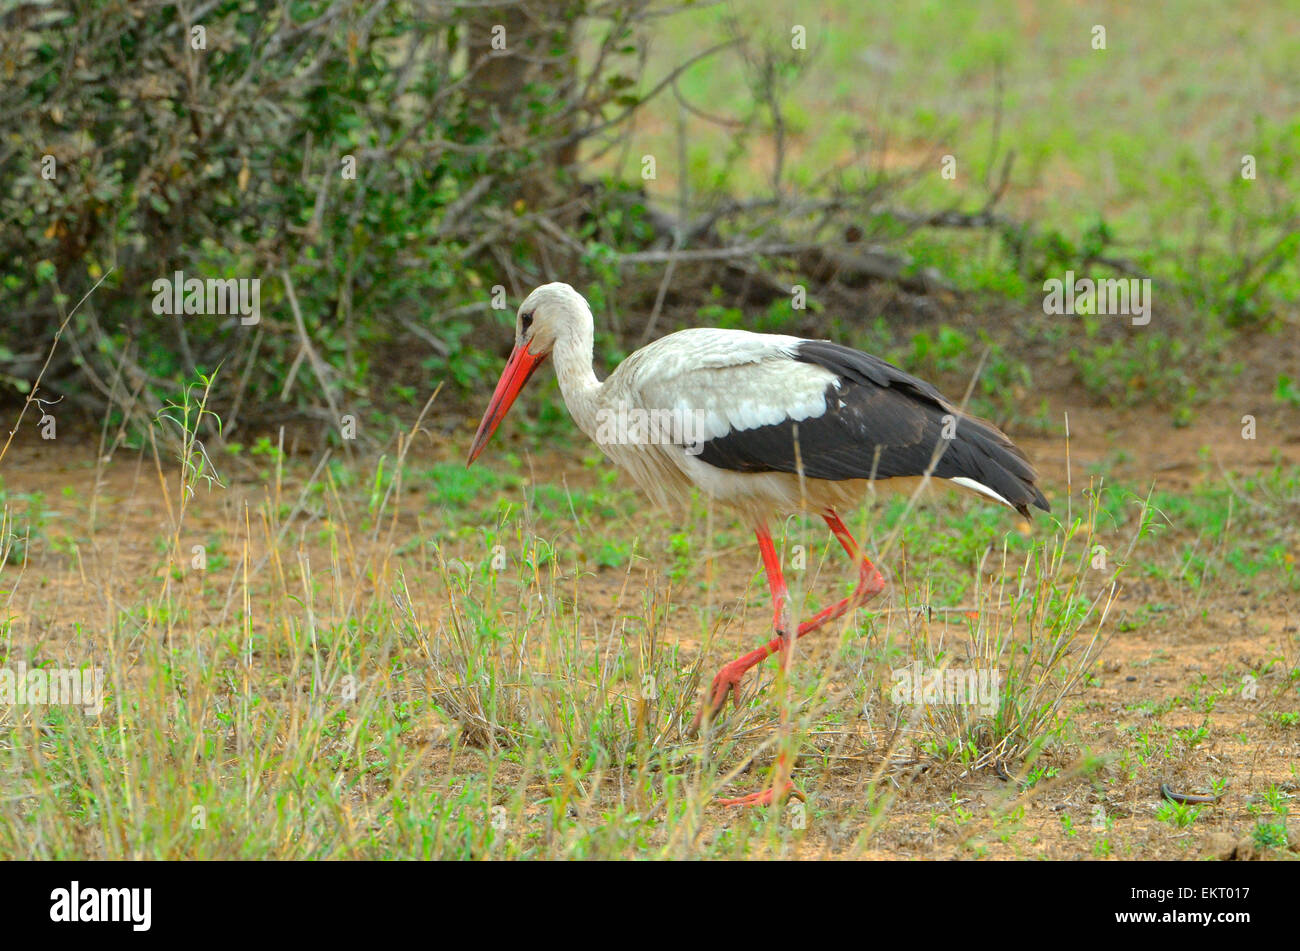 European stork enjoying summer in South Africa, Kruger National Park. Stock Photo